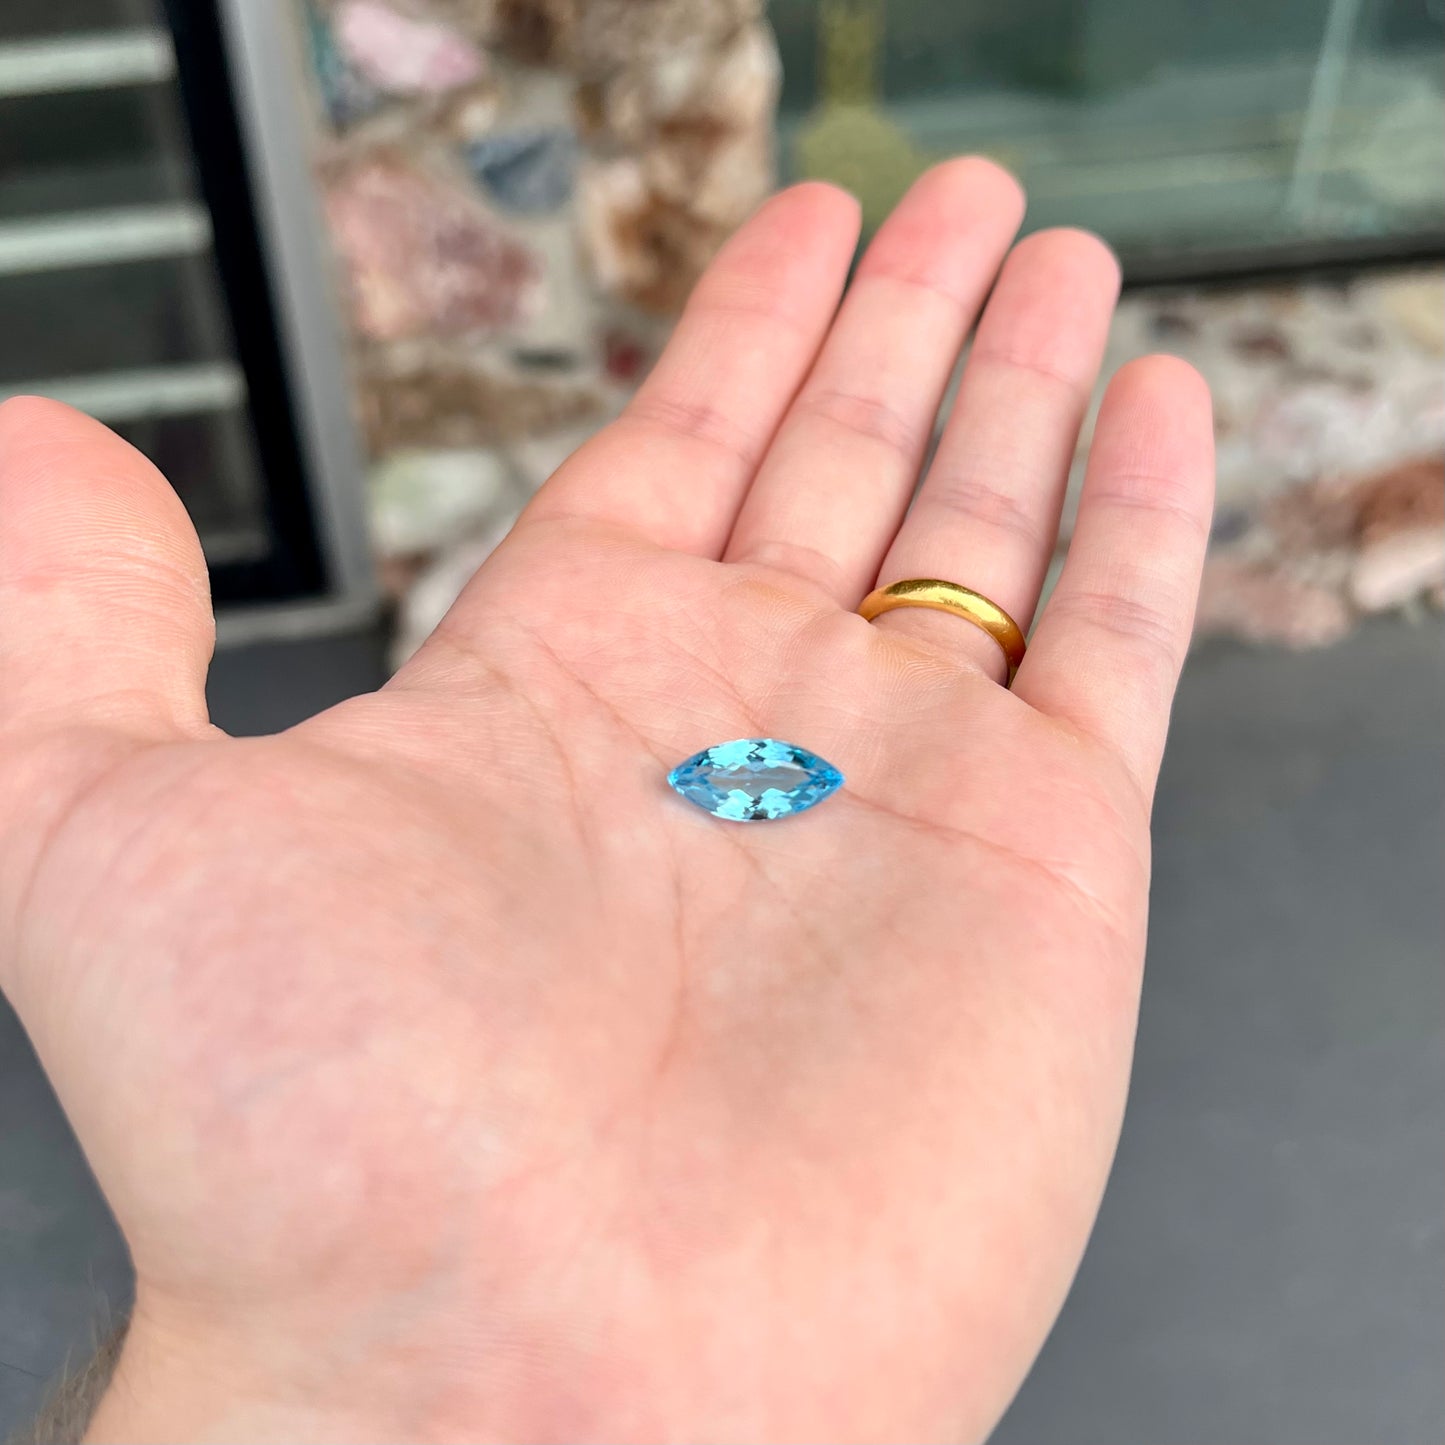 A loose, marquise cut blue topaz gemstone.